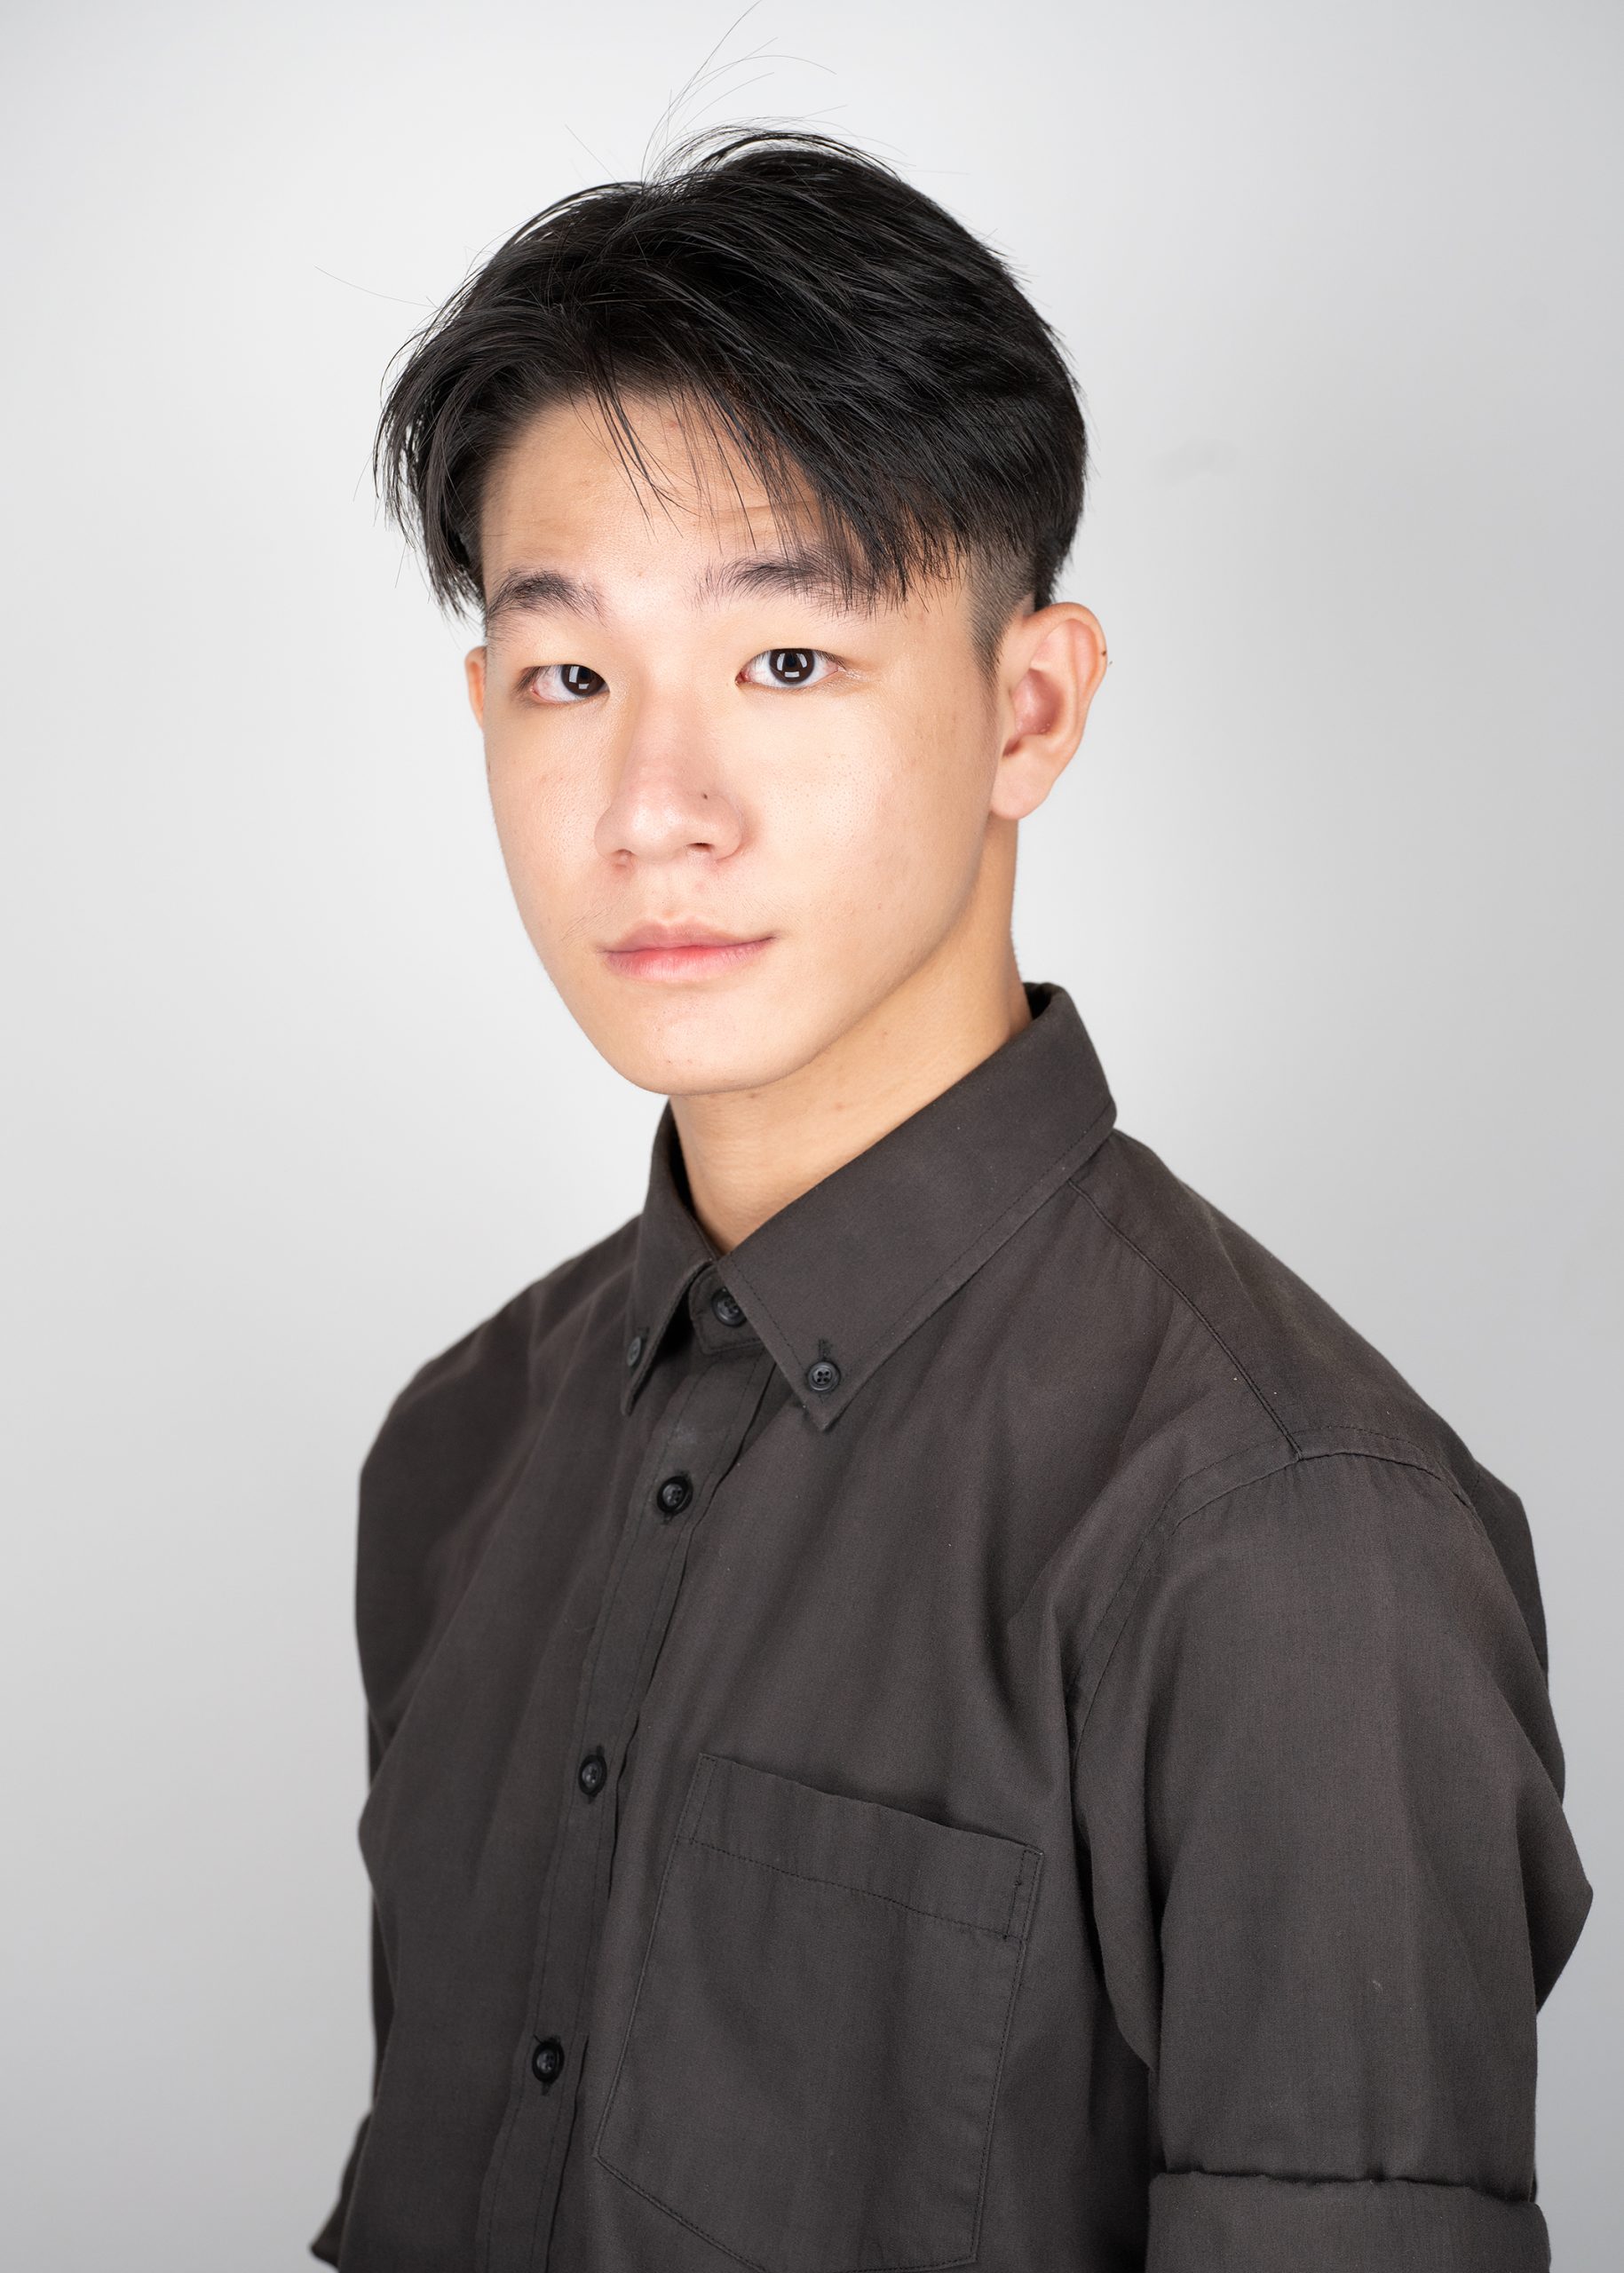 Tan Kar Jiun – Next Faces Talents Pool